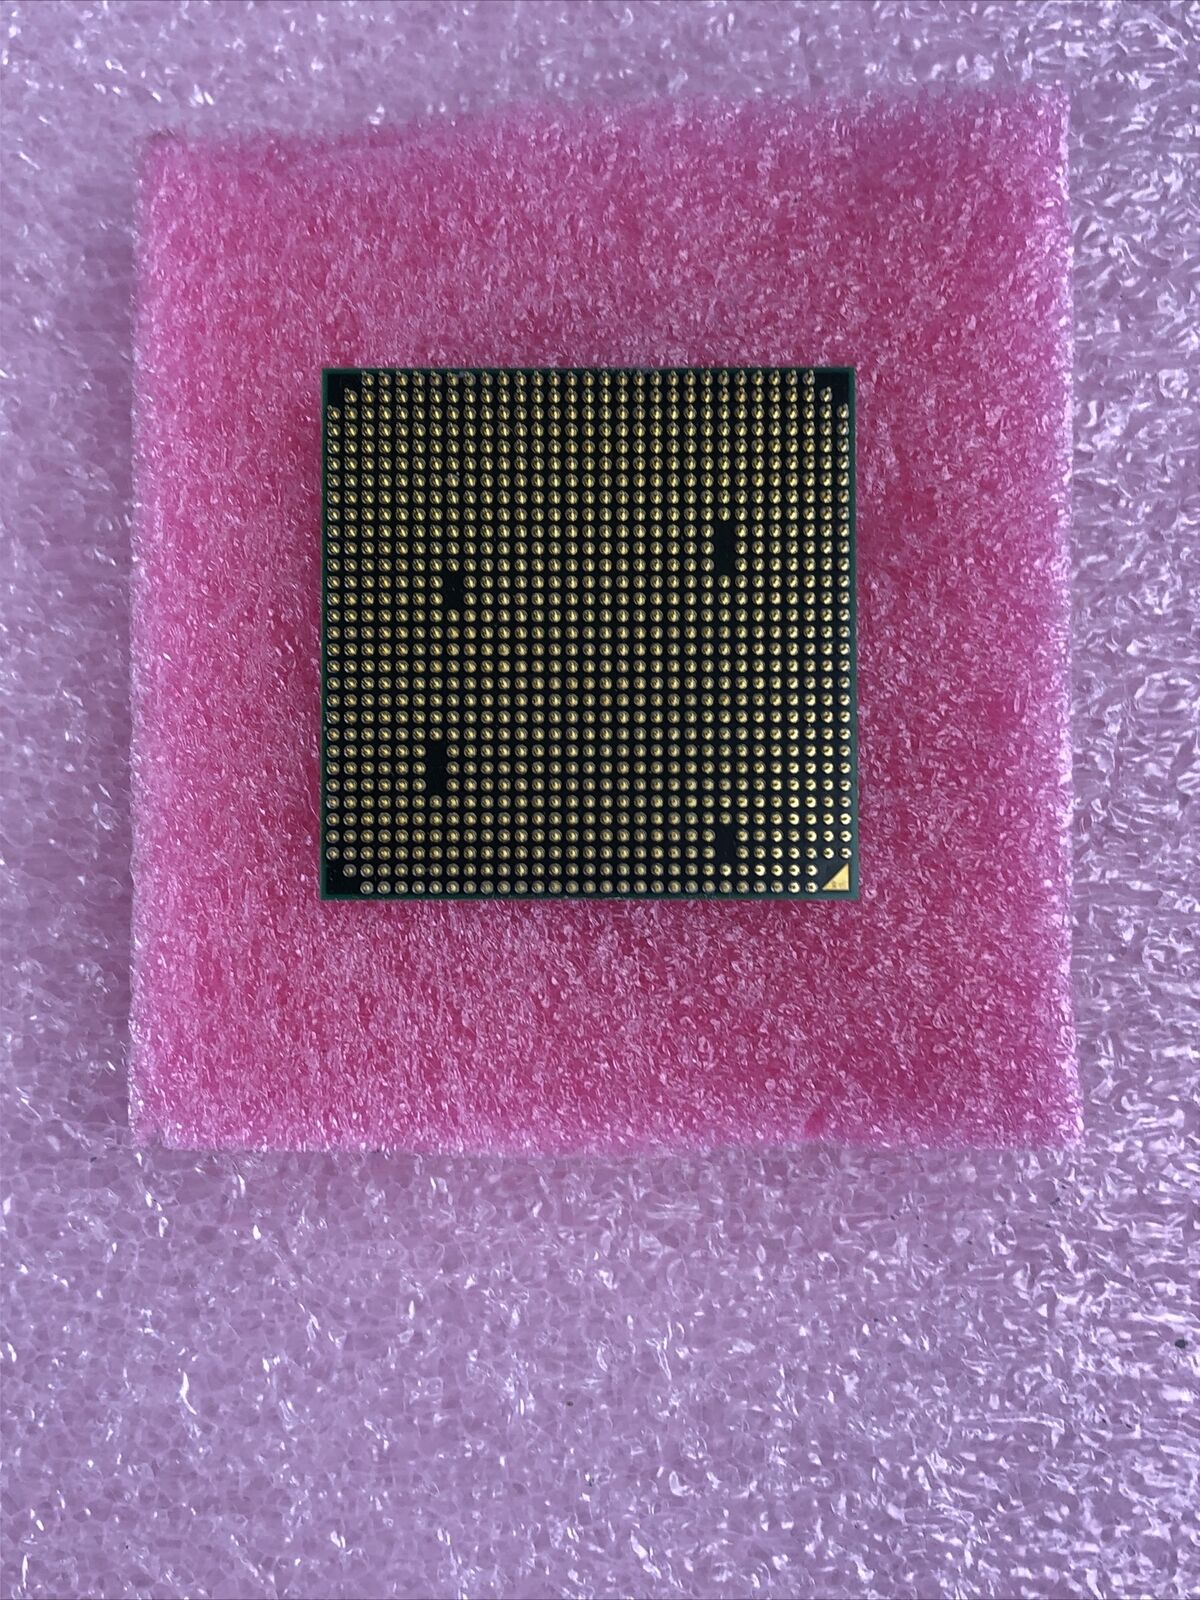 AMD Phenom II HDXB75WFK3DGI 3GHz CPU